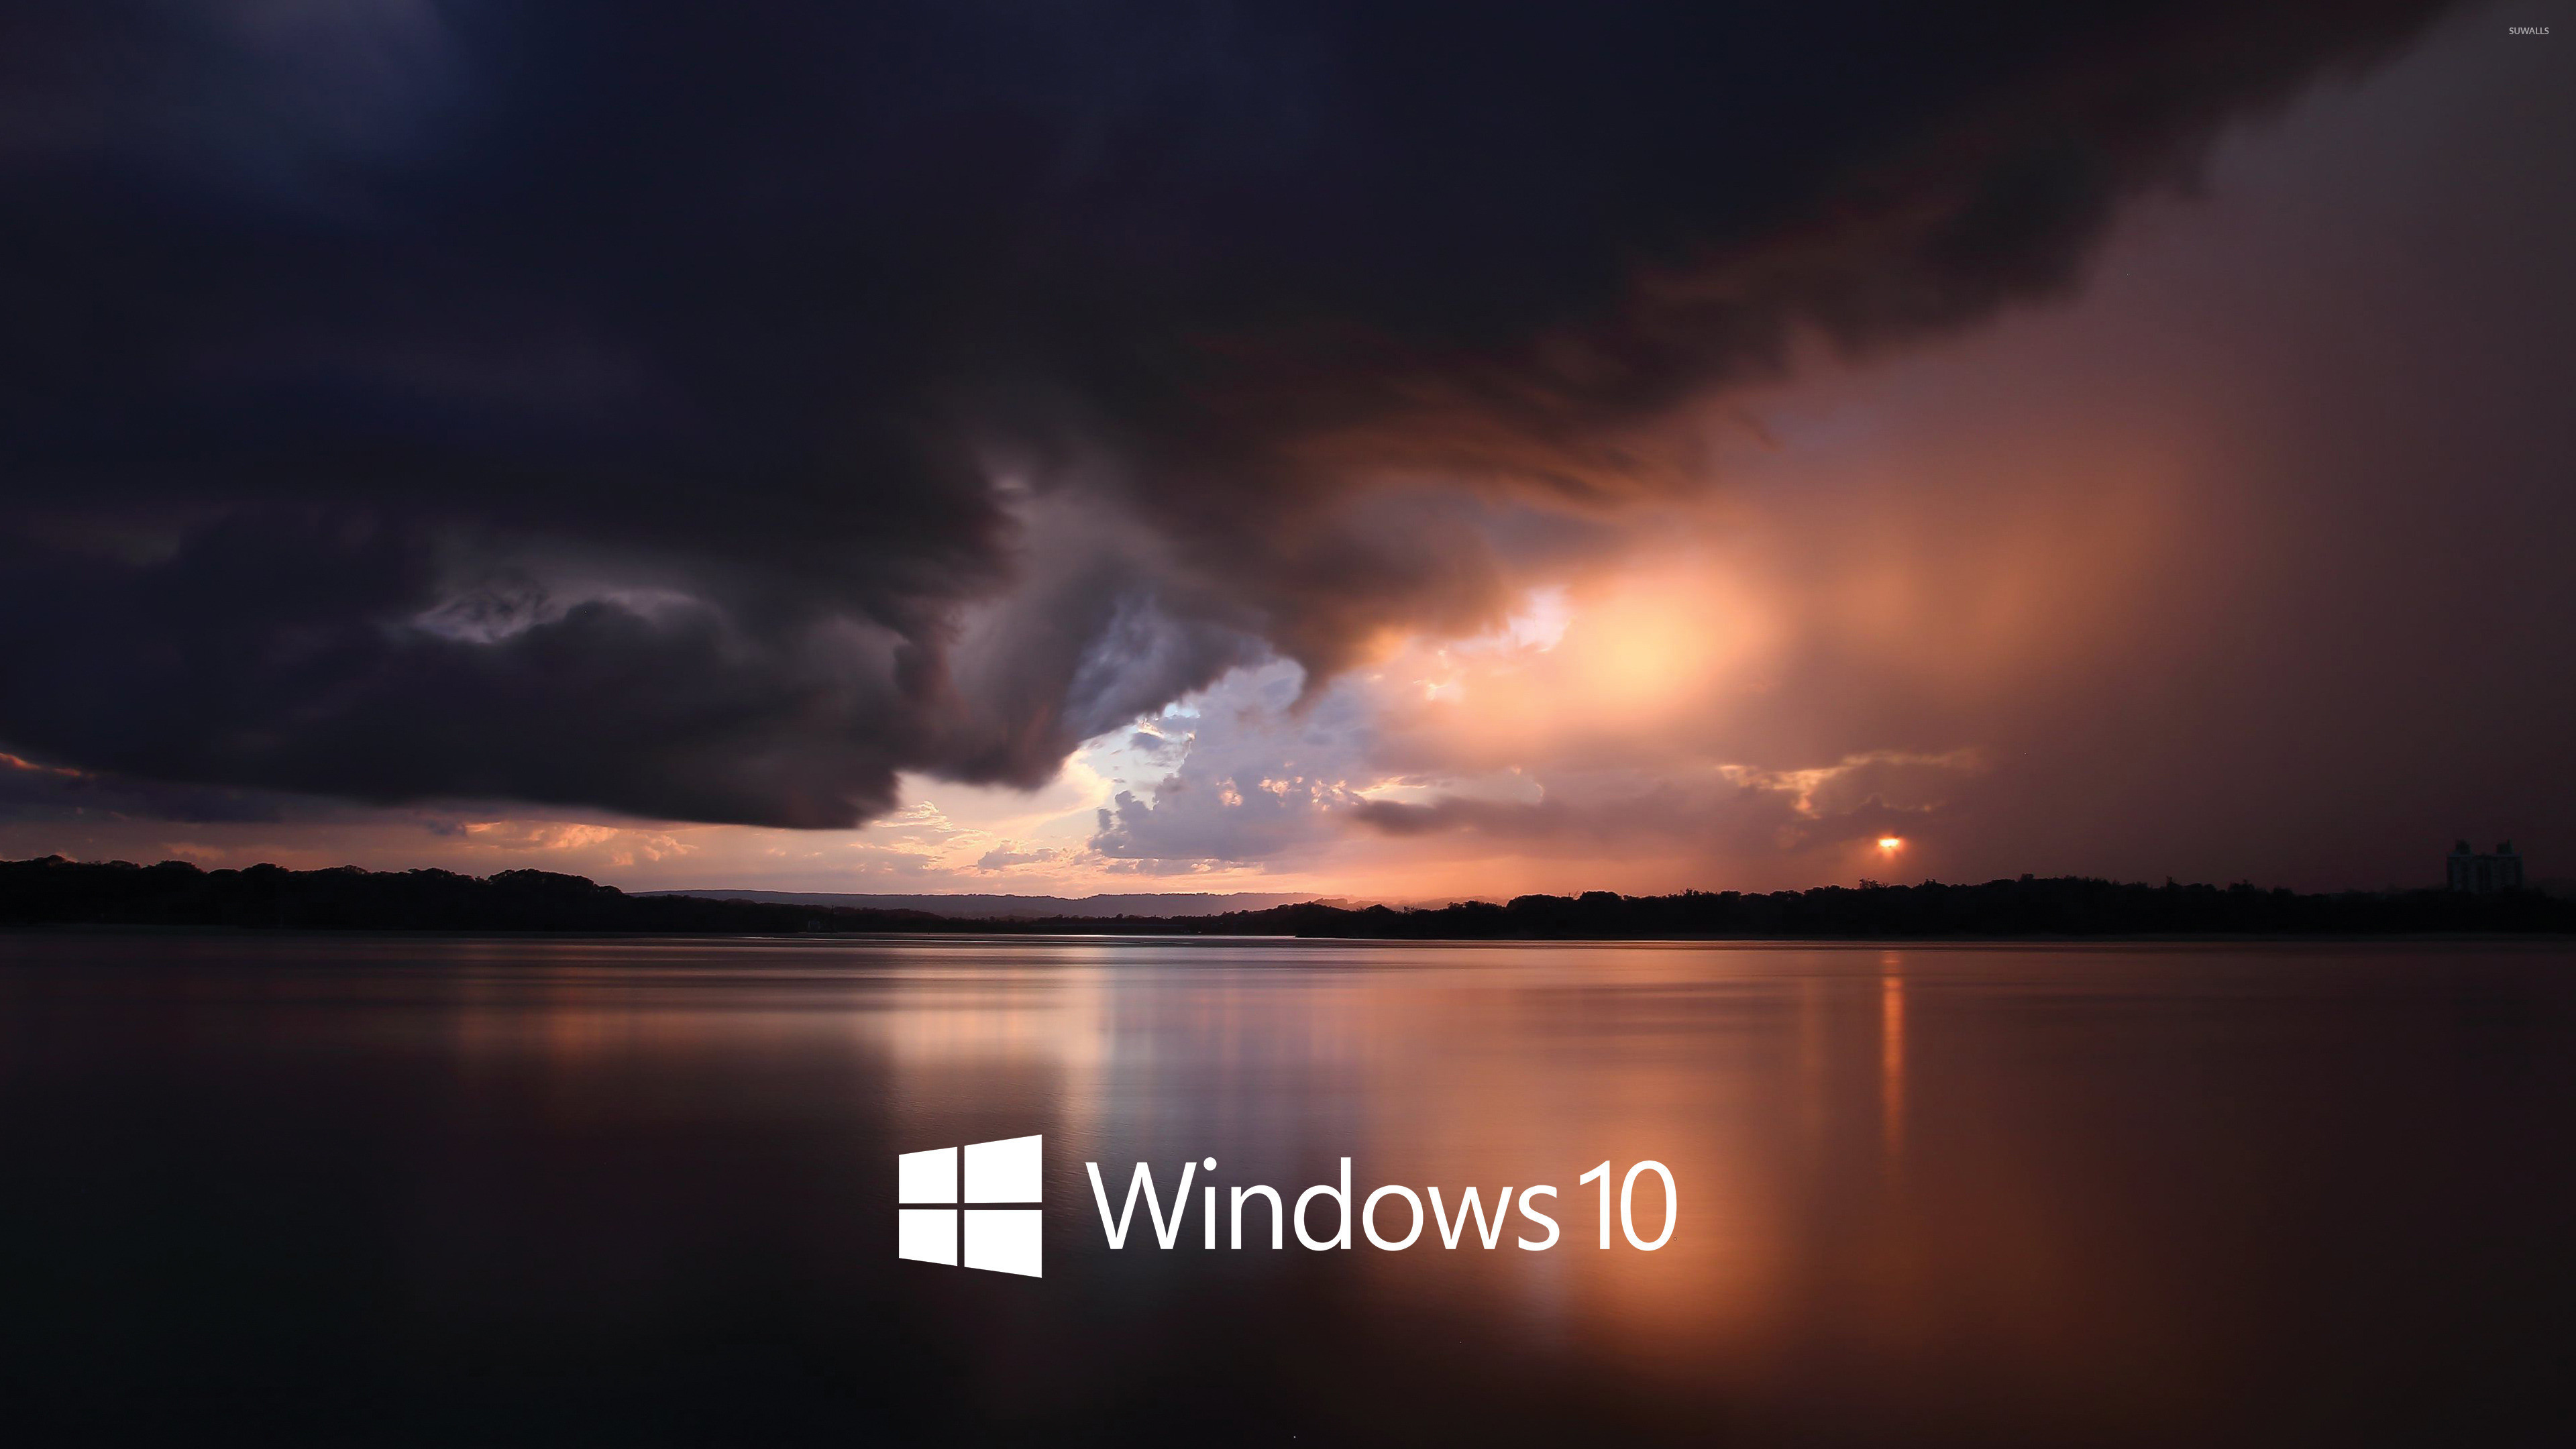 3840x2160 Windows 10 white text logo over the stormy sea wallpaper  jpg